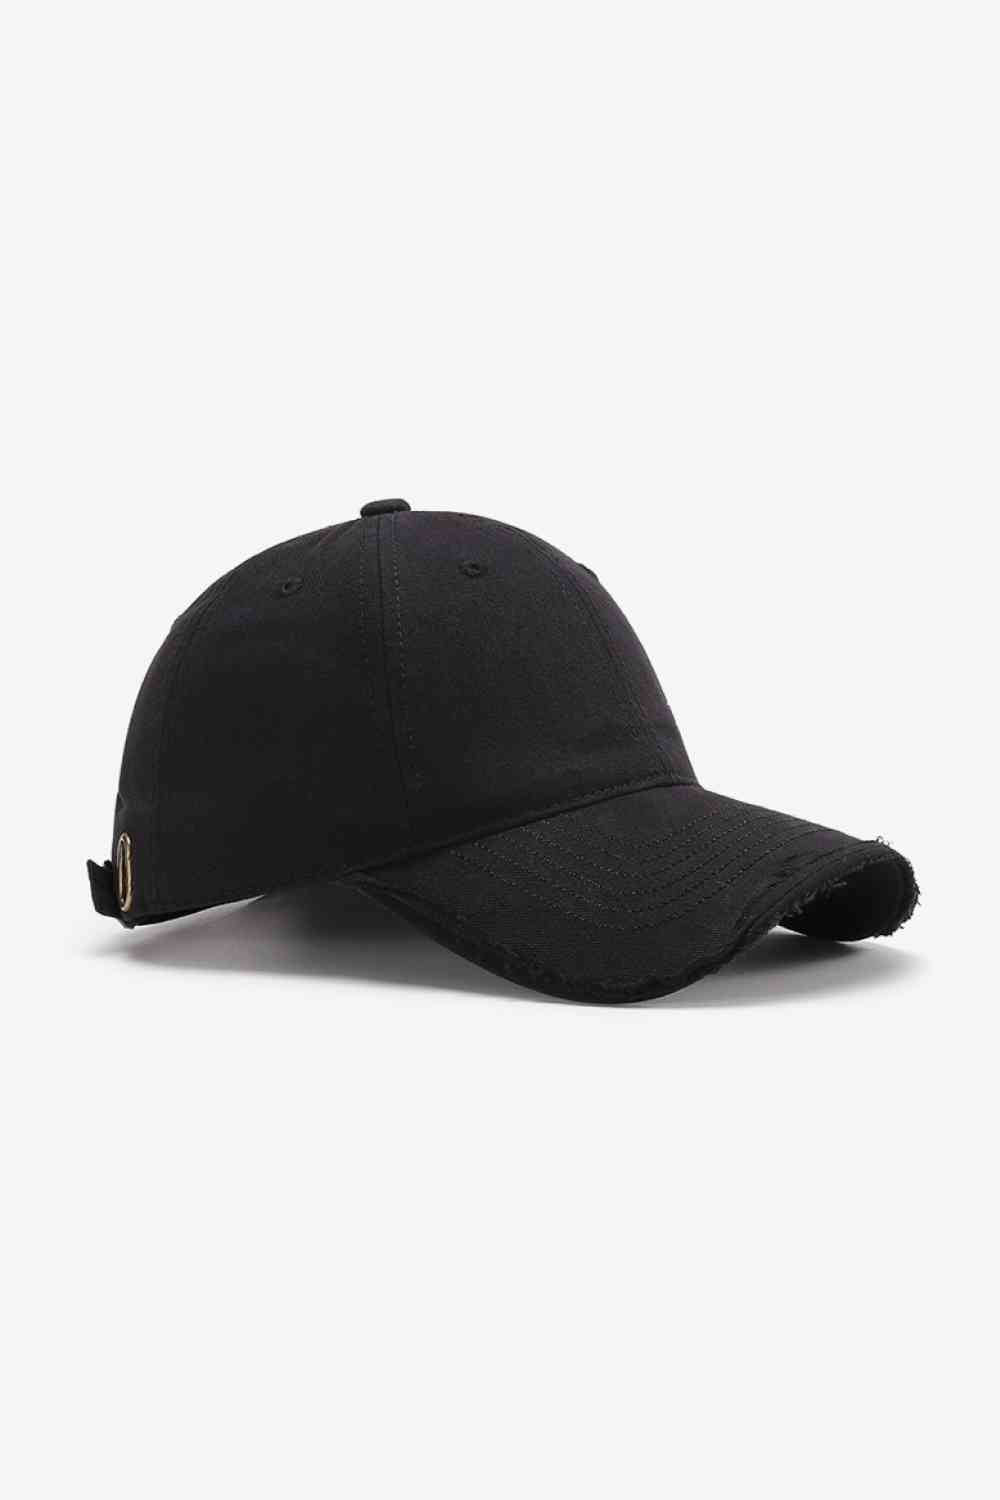 Distressed Adjustable Baseball Cap Black One Size